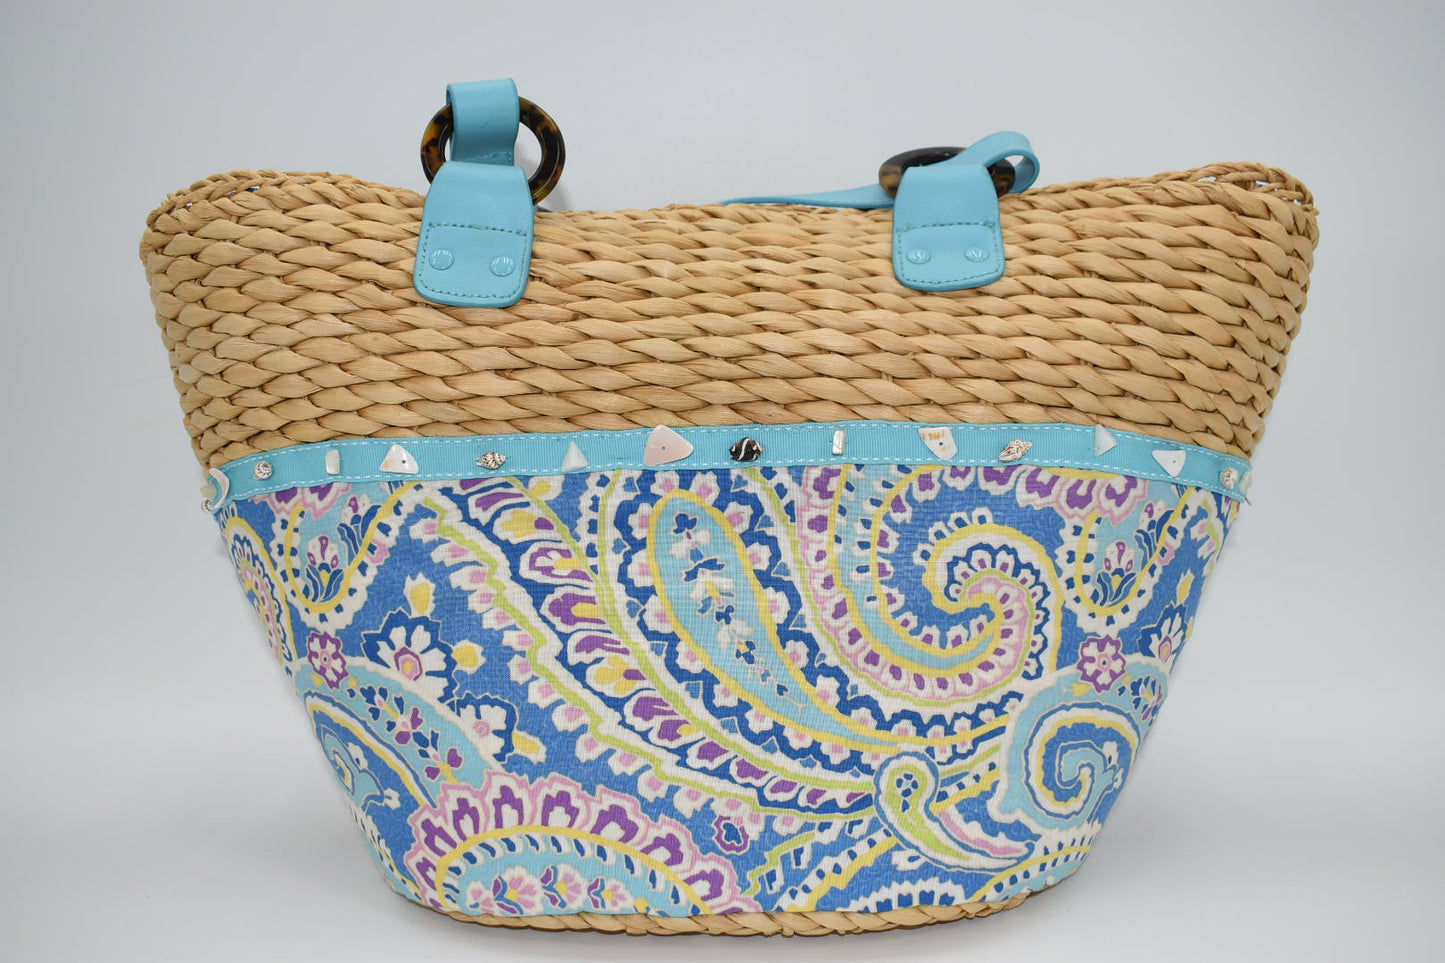 Vera Bradley "Capri Blue" Large Straw Tote Bag with Sea Shell Trim